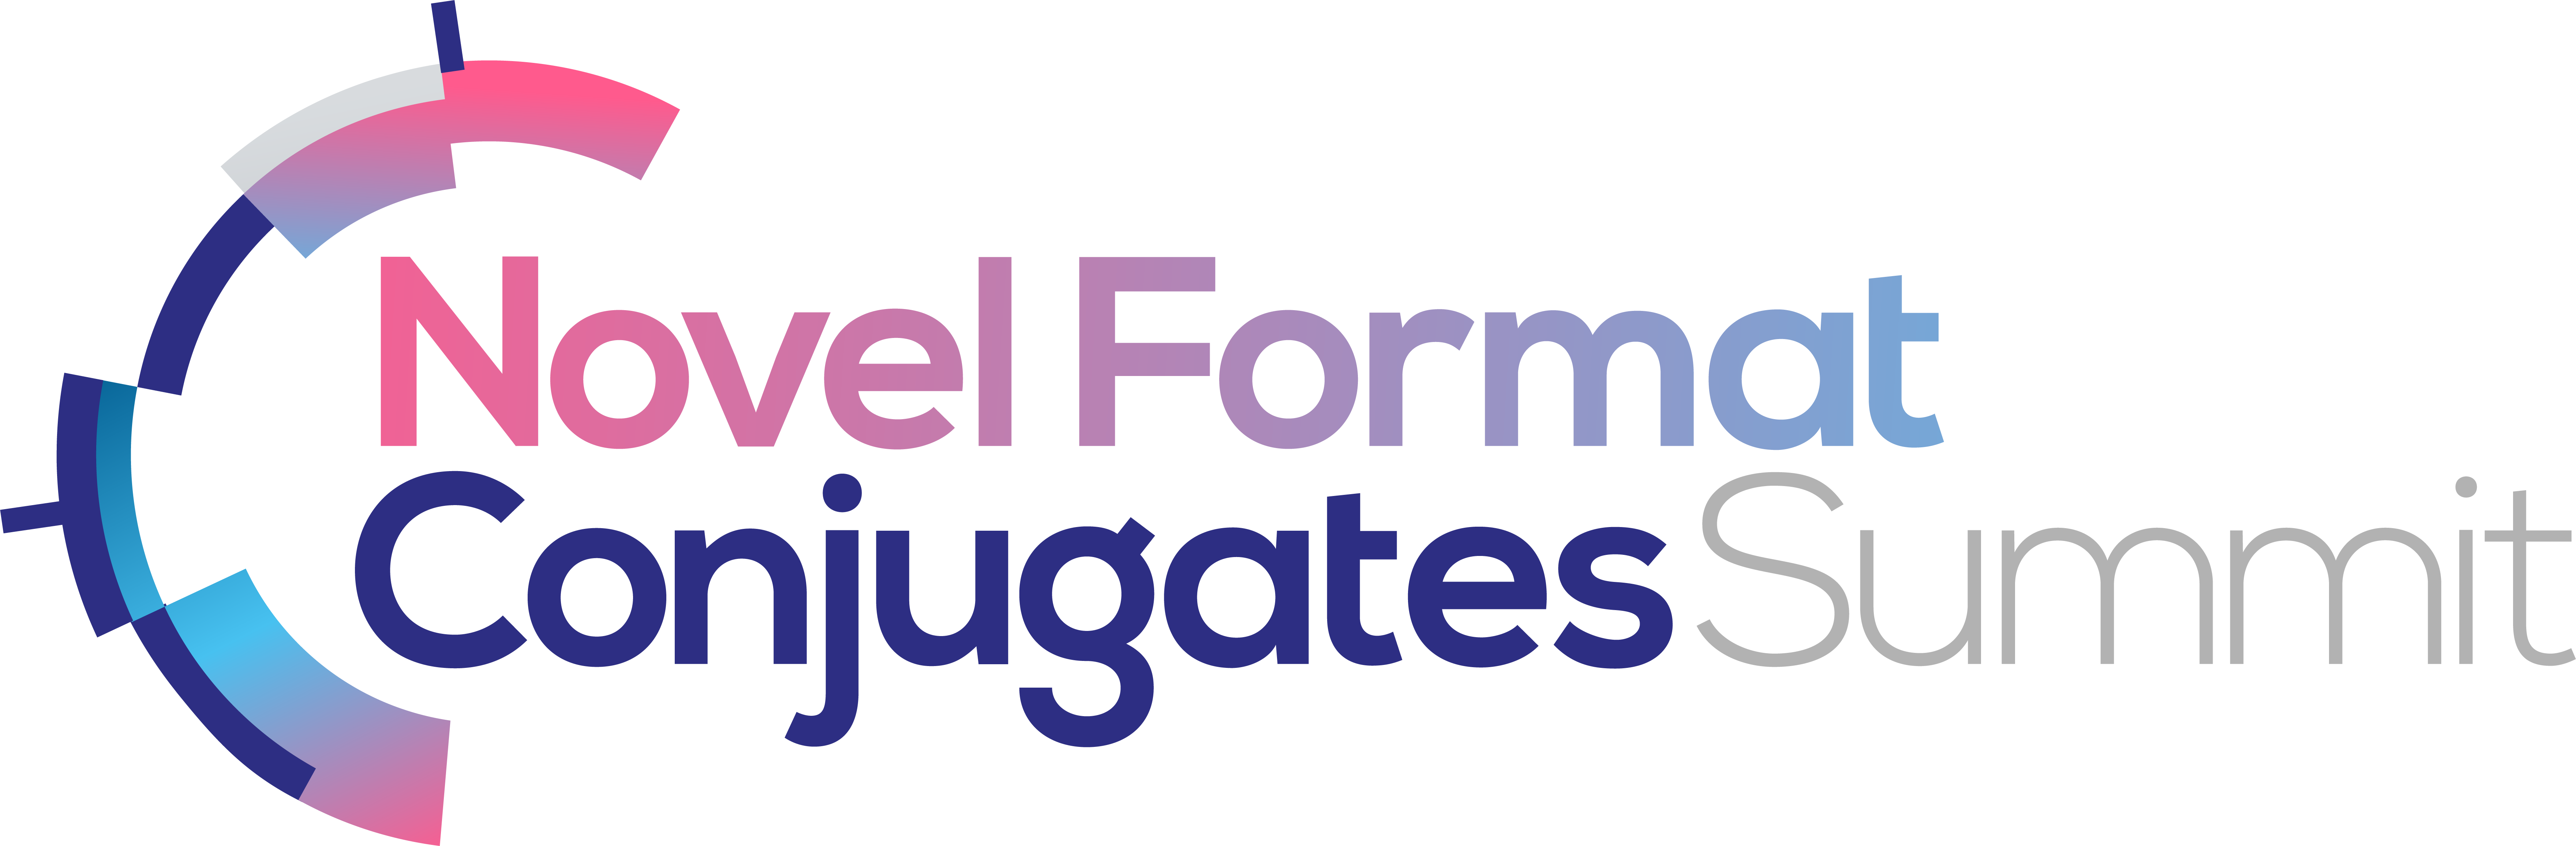 Novel Format Conjugates Summit Logo (002)